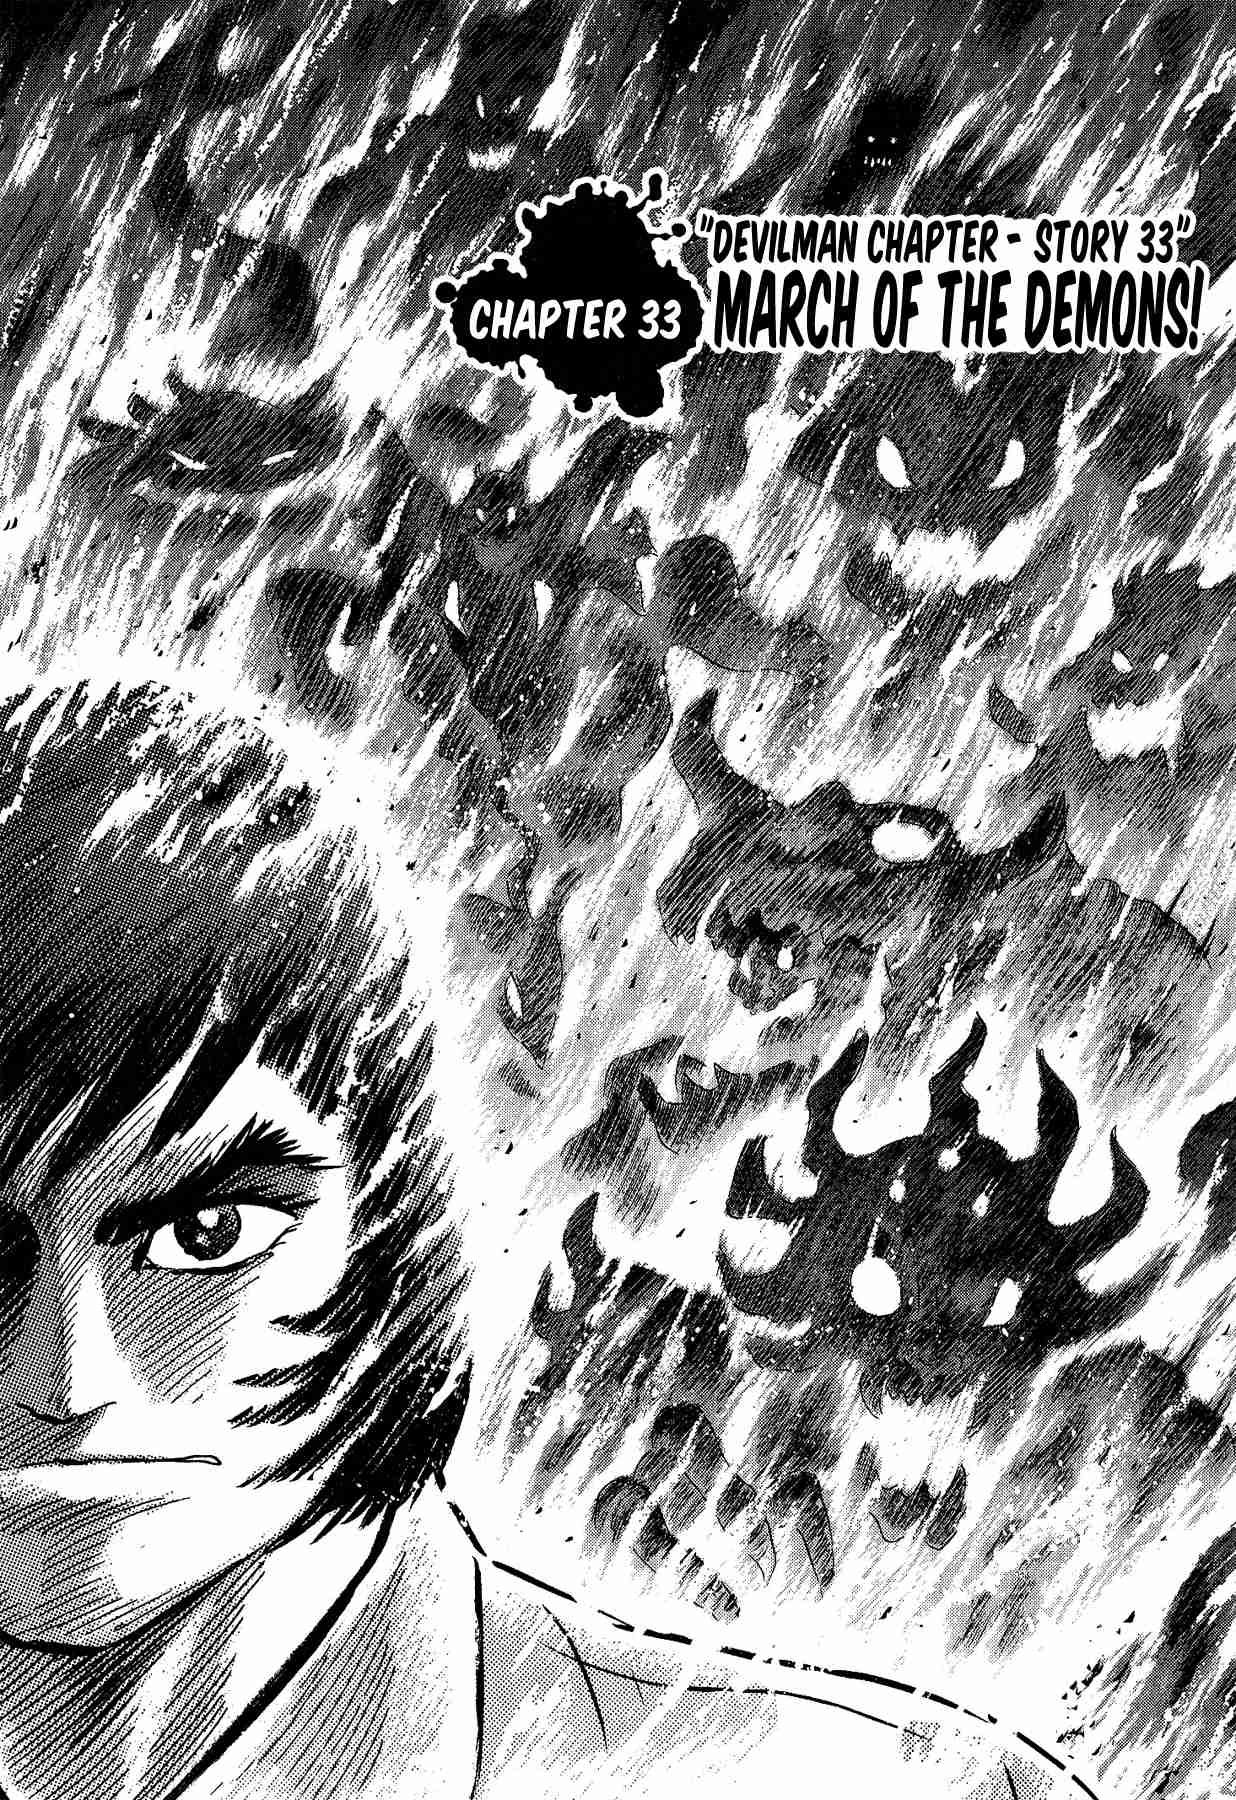 Gekiman! Devilman Chapter Vol. 4 Ch. 33 March of the Demons!